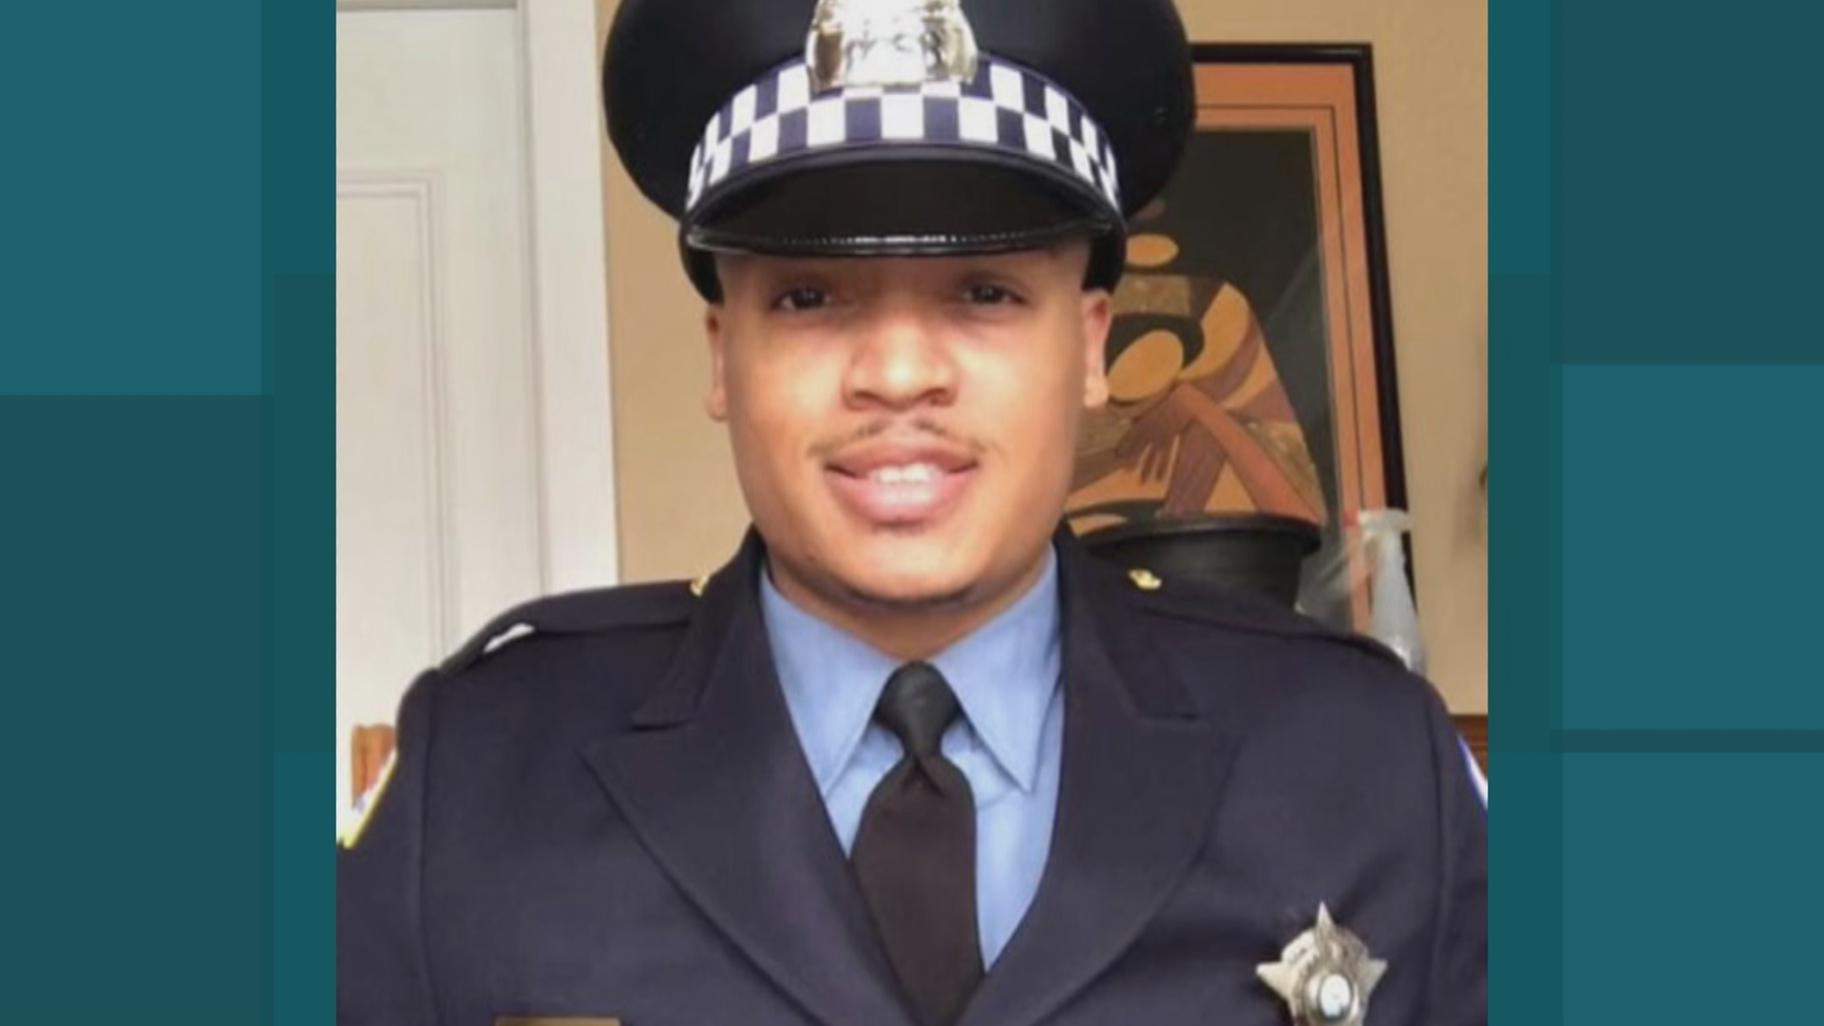 Chicago police Officer Derrick Jones Jr. was shot in the head in June 2019. (Provided)